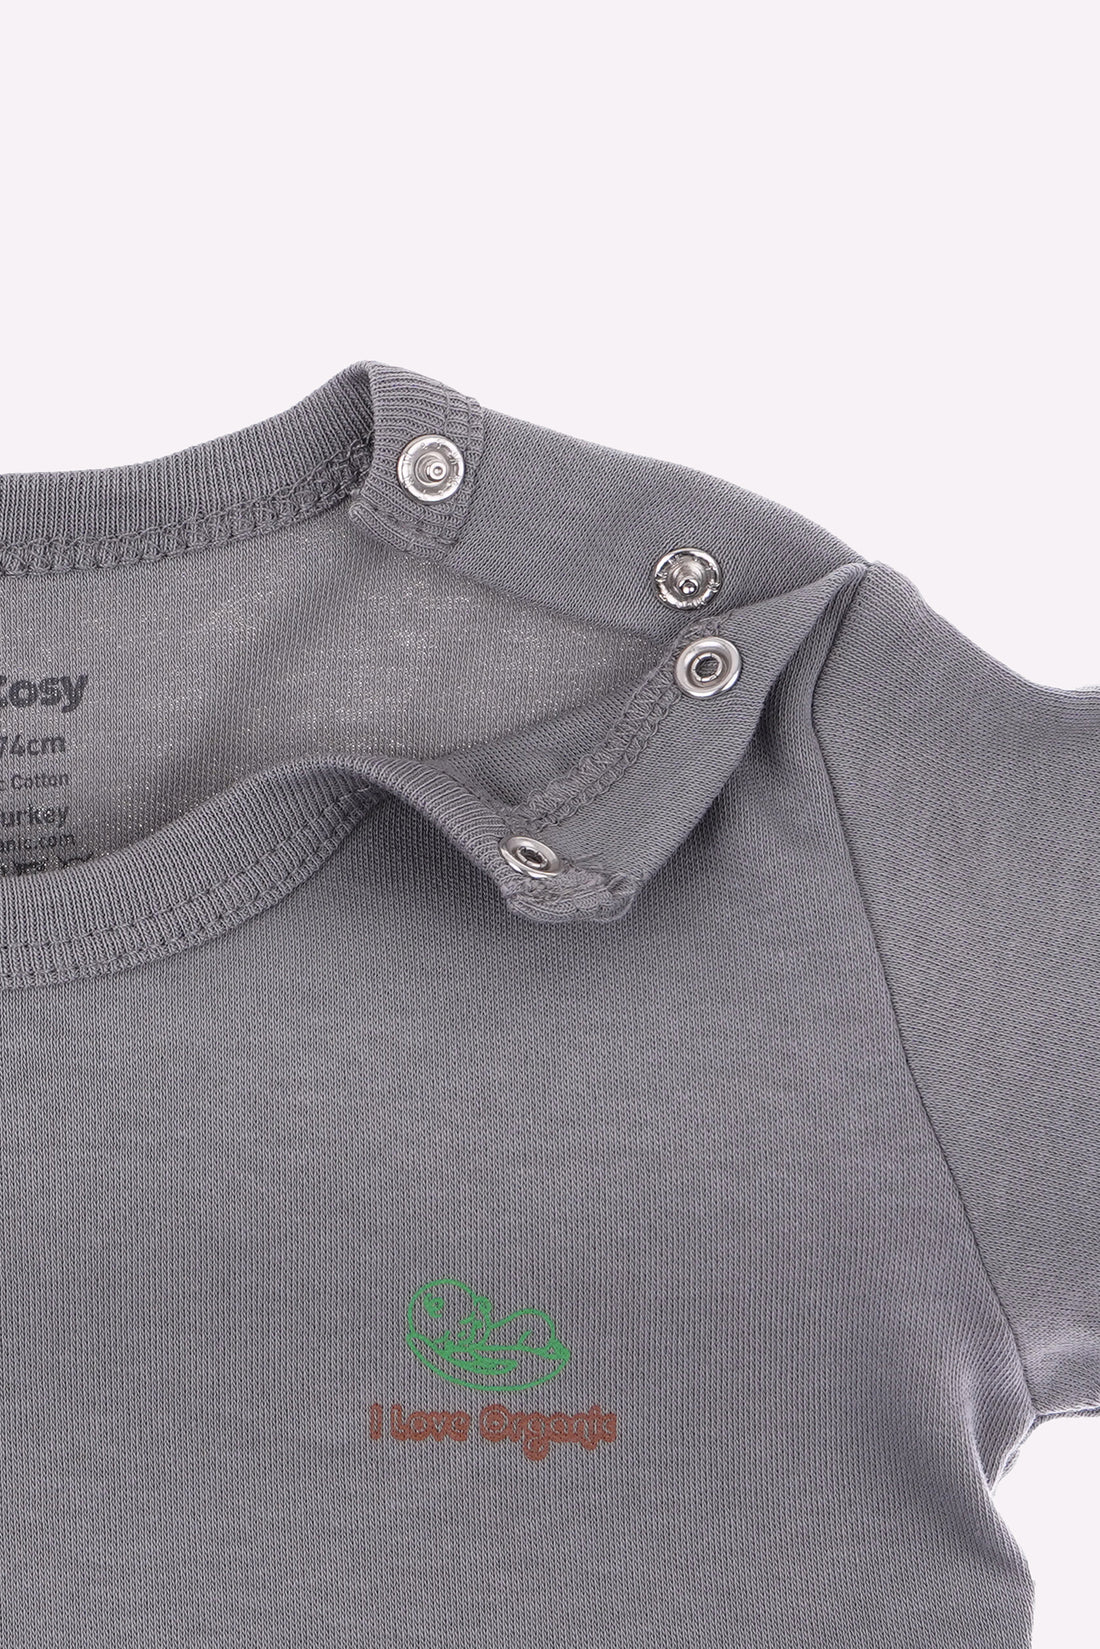 Babycosy Organic Basic T-shirt Set of 2 (Gray & White)